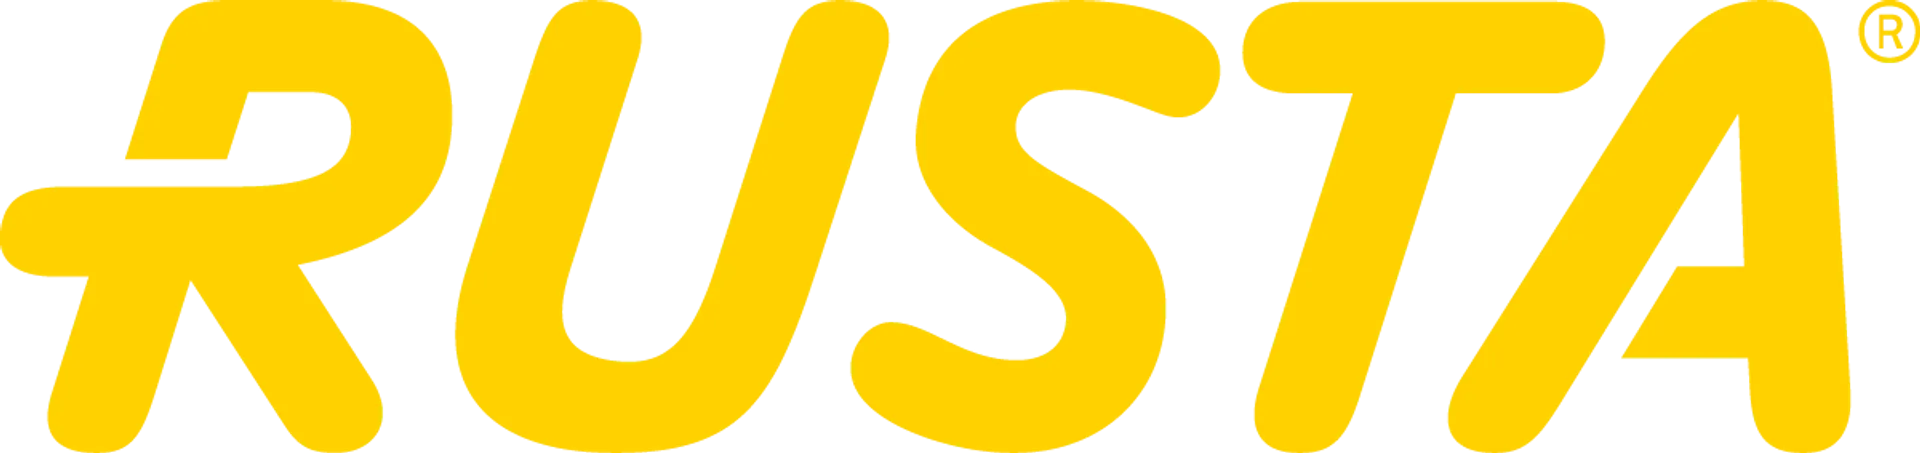 RUSTA logo